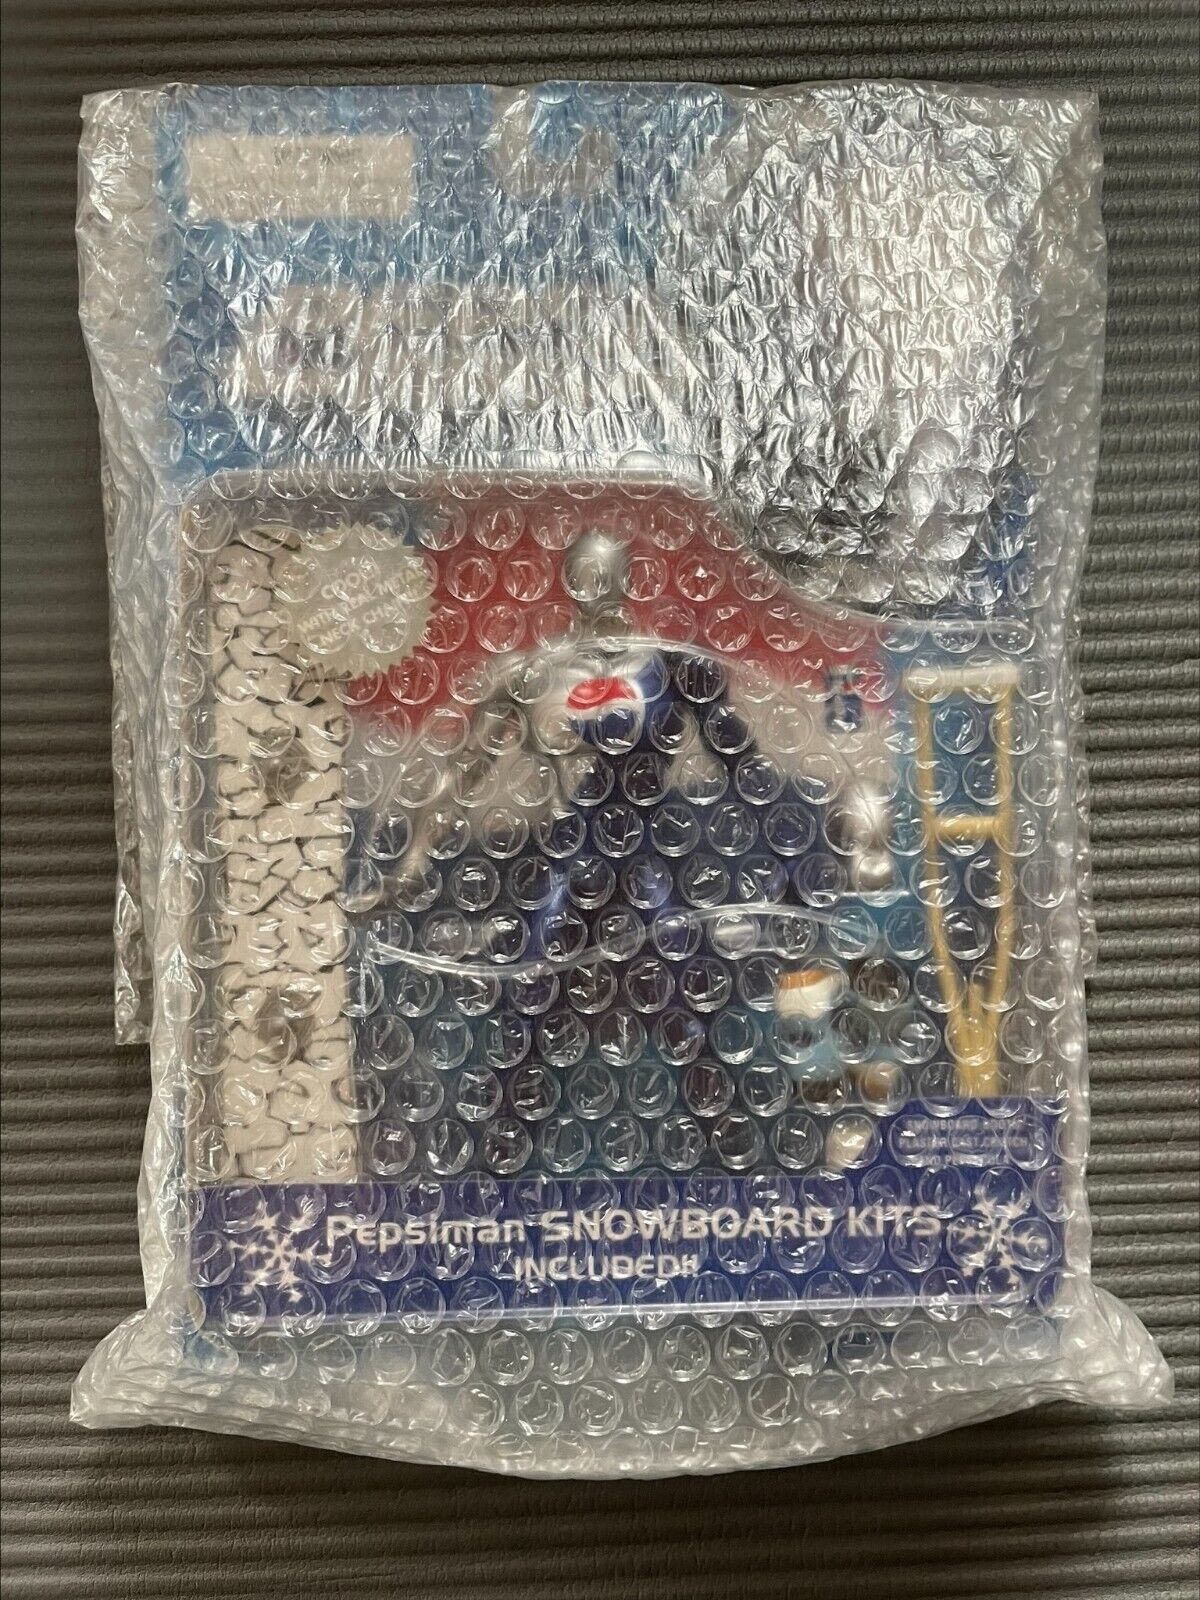 Bandai 1998 PEPSI MAN Snowboard Kits Pepsiman (Blue) mini Figure Unopen instock